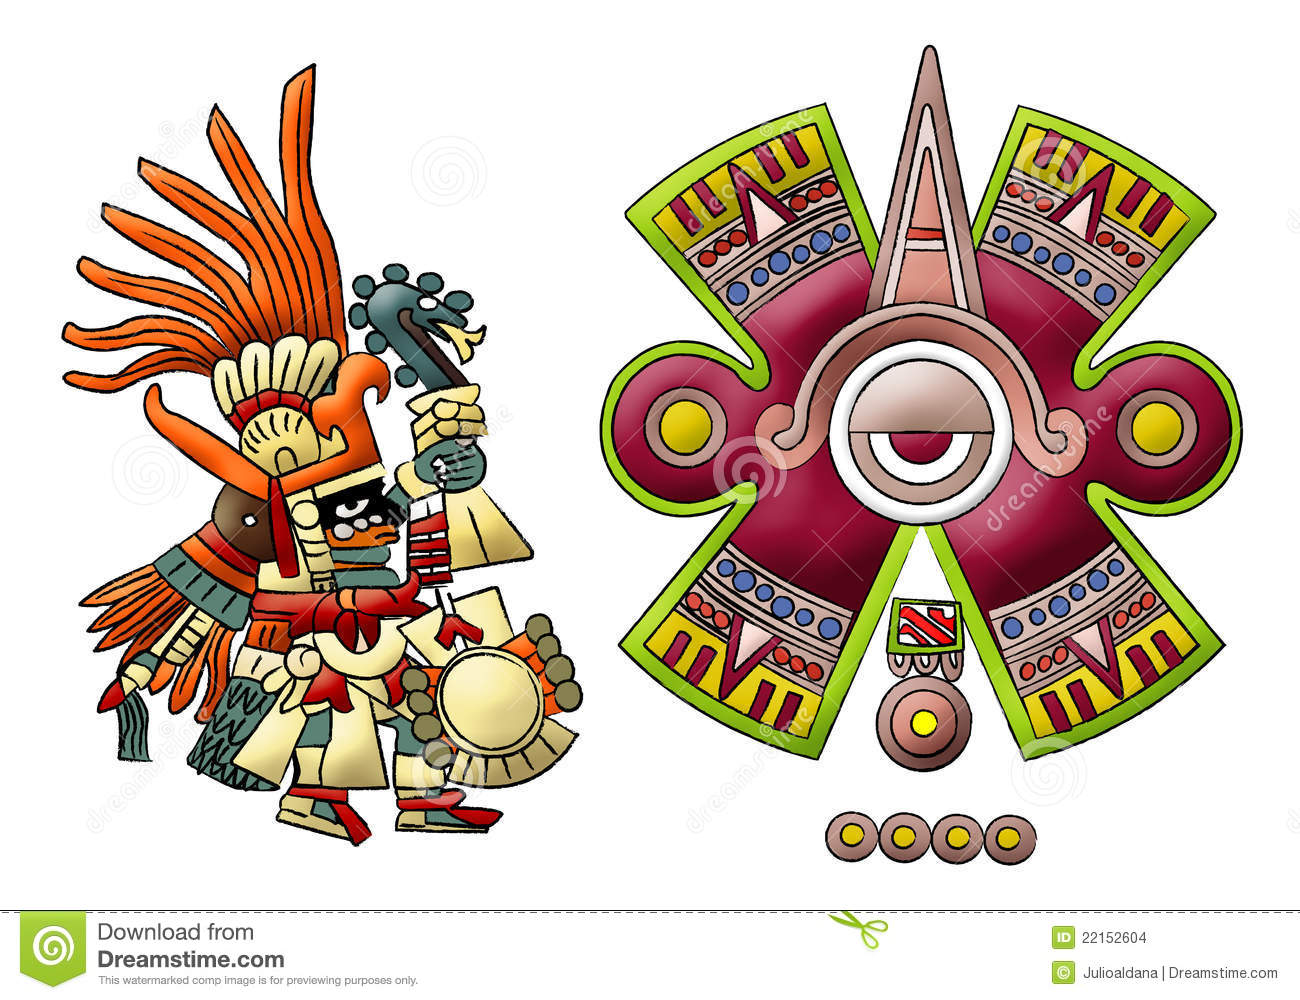 Huitzilopochtli clipart #4, Download drawings